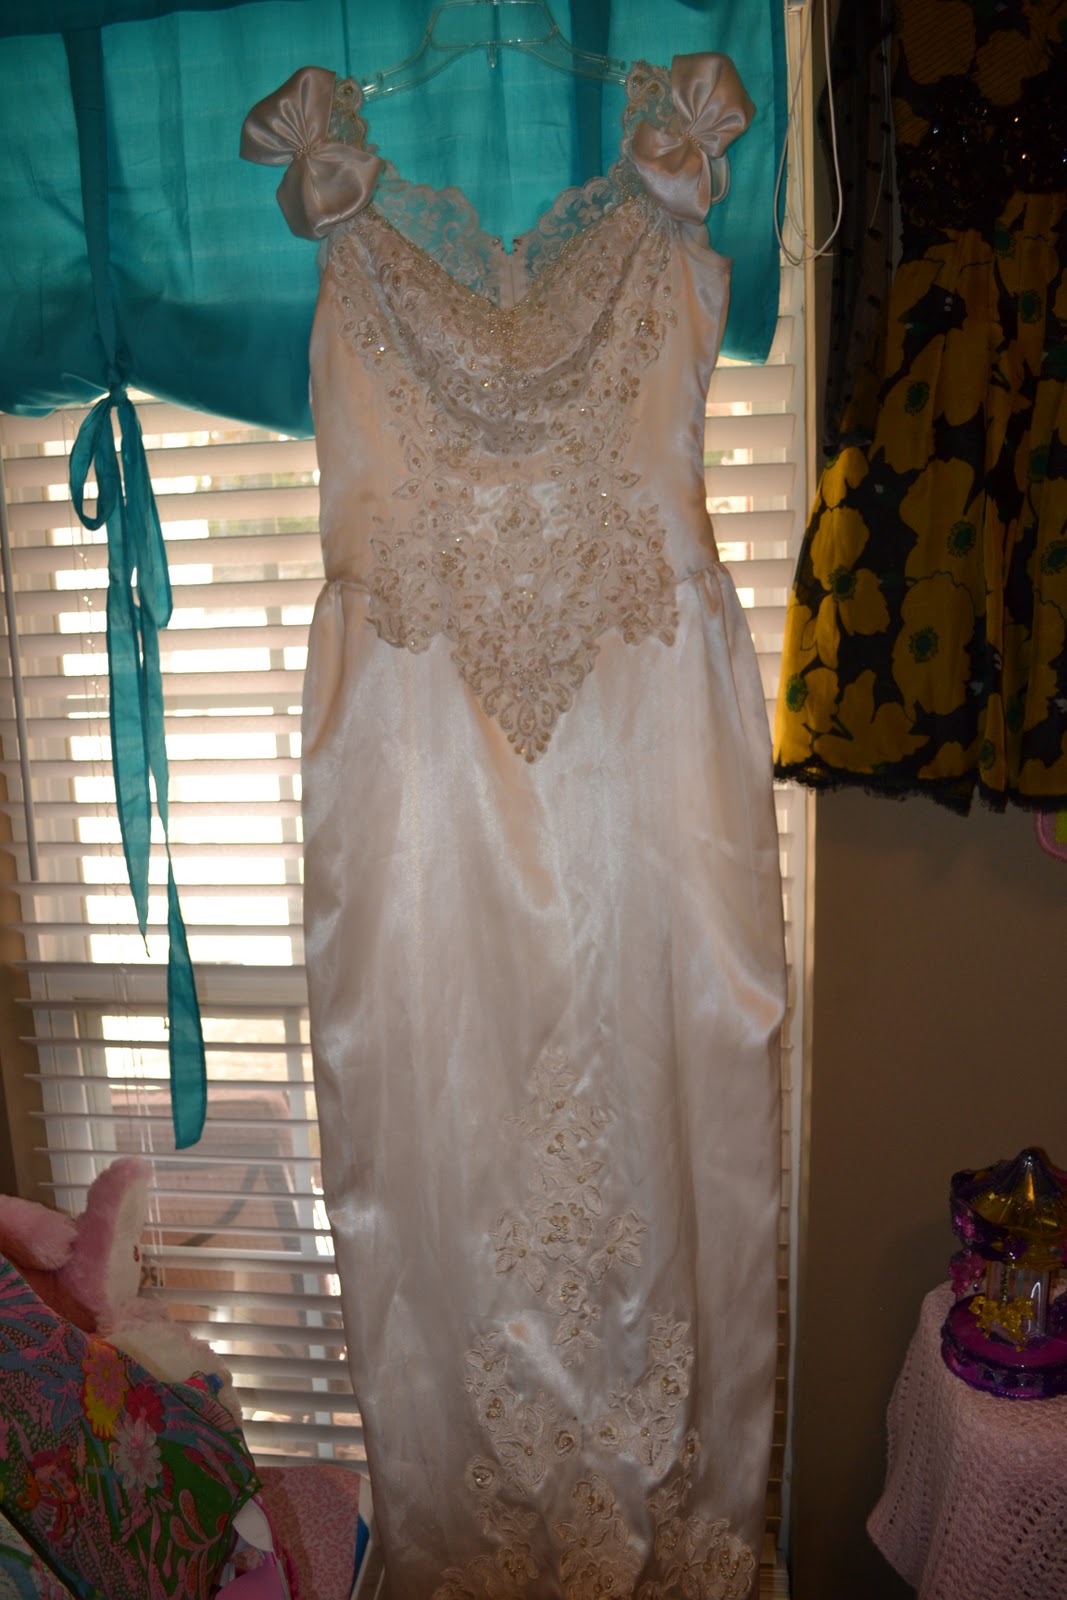 Victory Vintage Boutique Design Blog: DIY wedding dress -repurpose #2